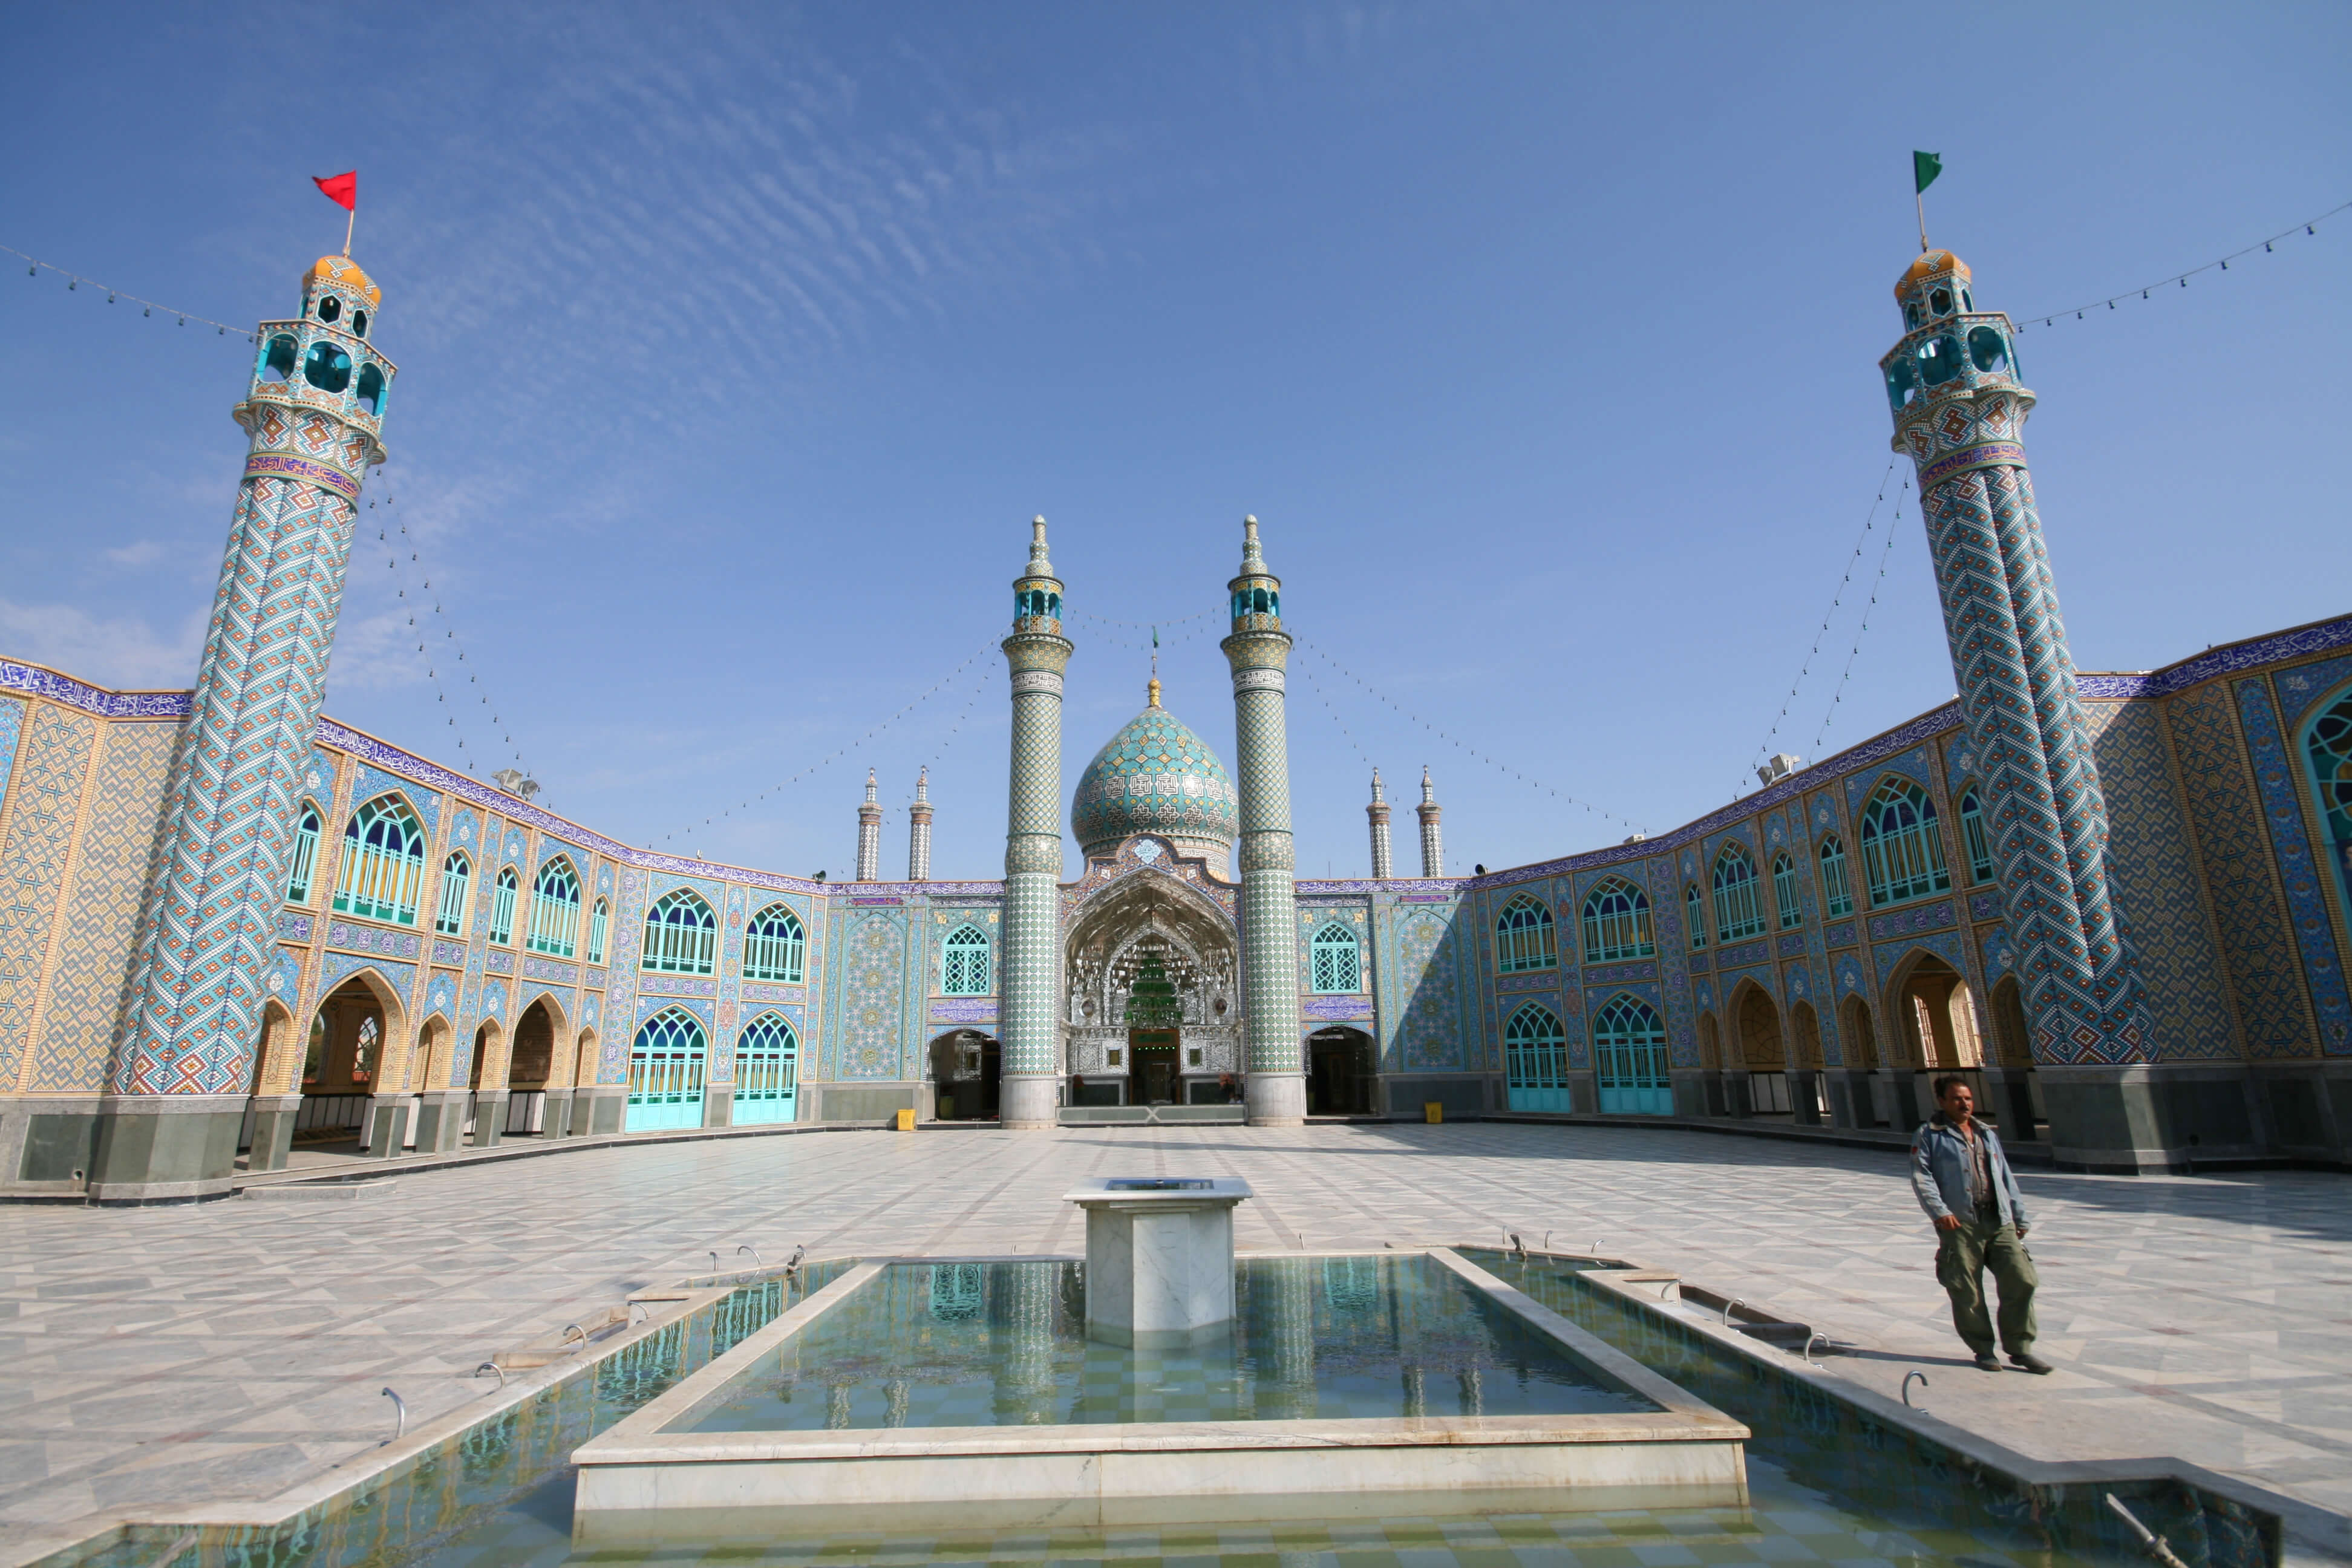 Roelants-foto-Moskee nabij Kashan, Iran - Bas Hiemstra-Flickr